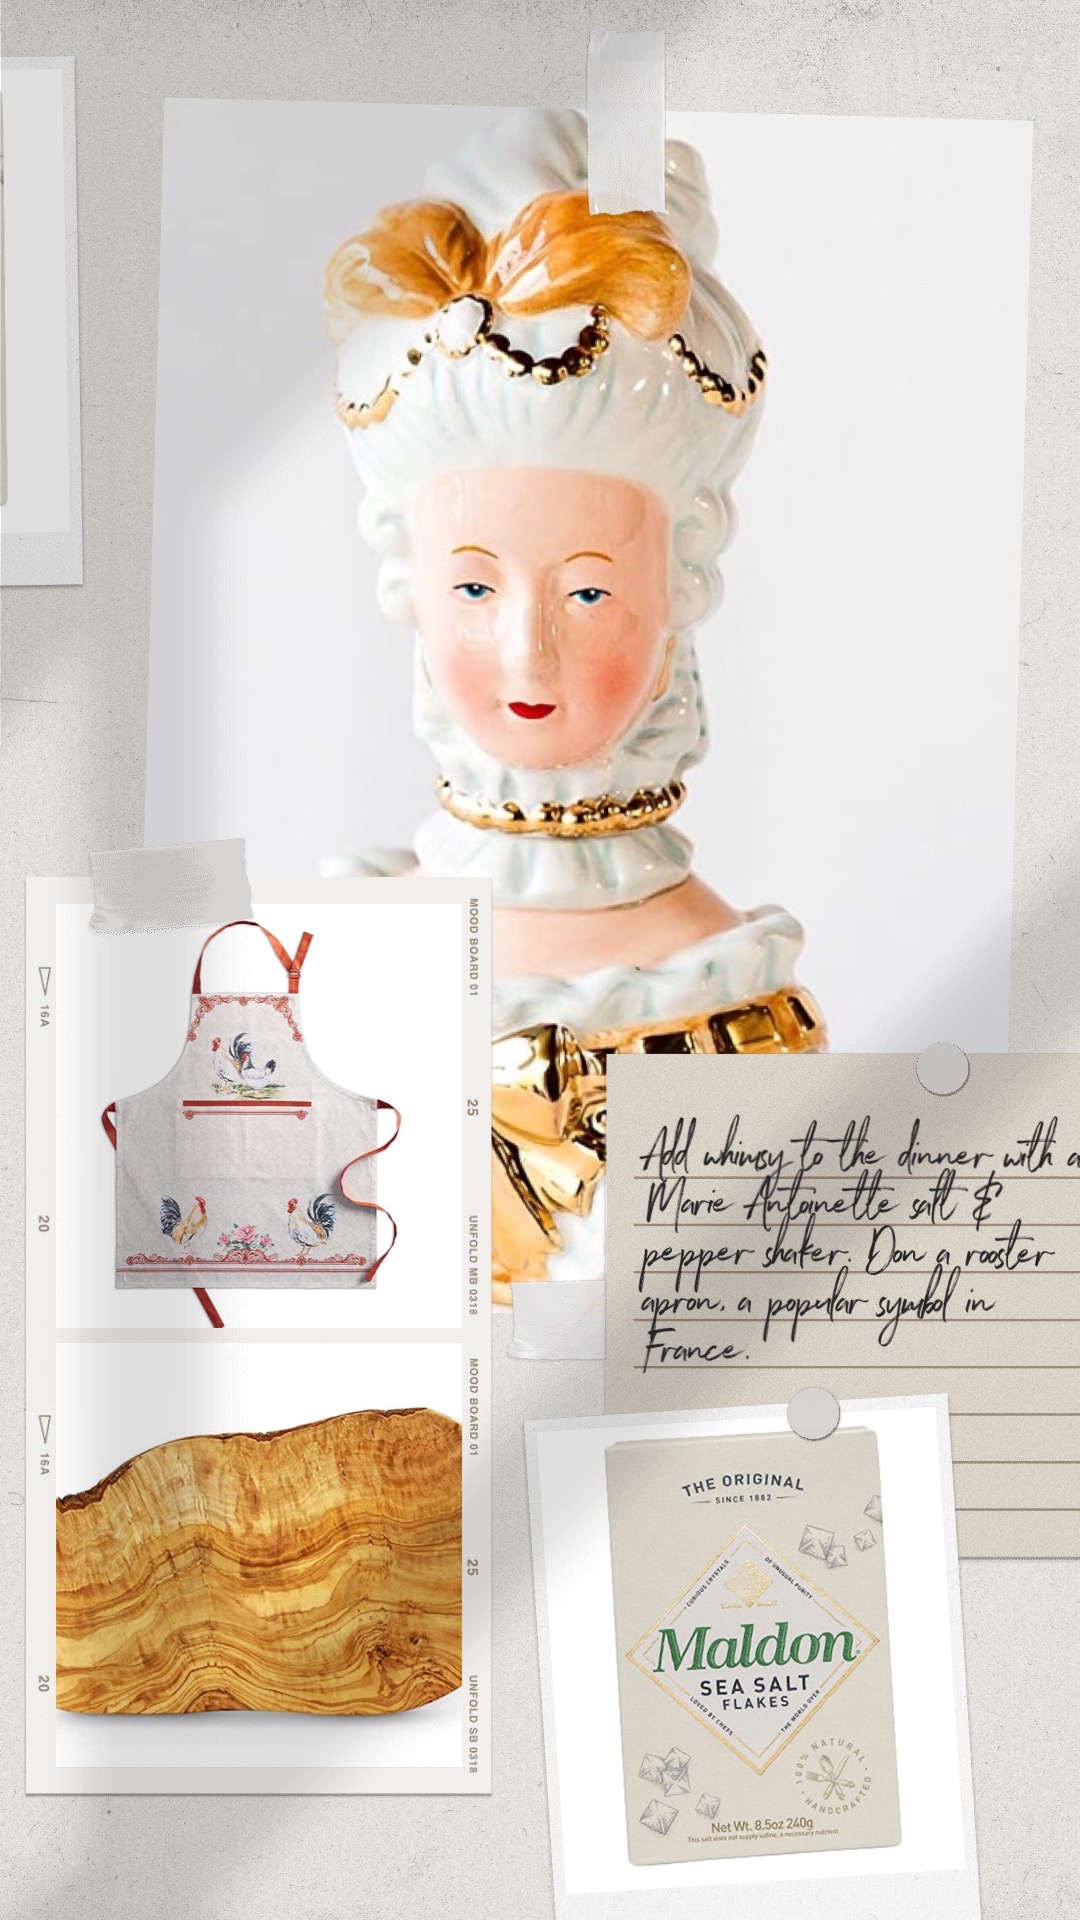 Marie Antoinette salt & pepper shaker, rooster apron, cutting board, Maldon Sea Salt